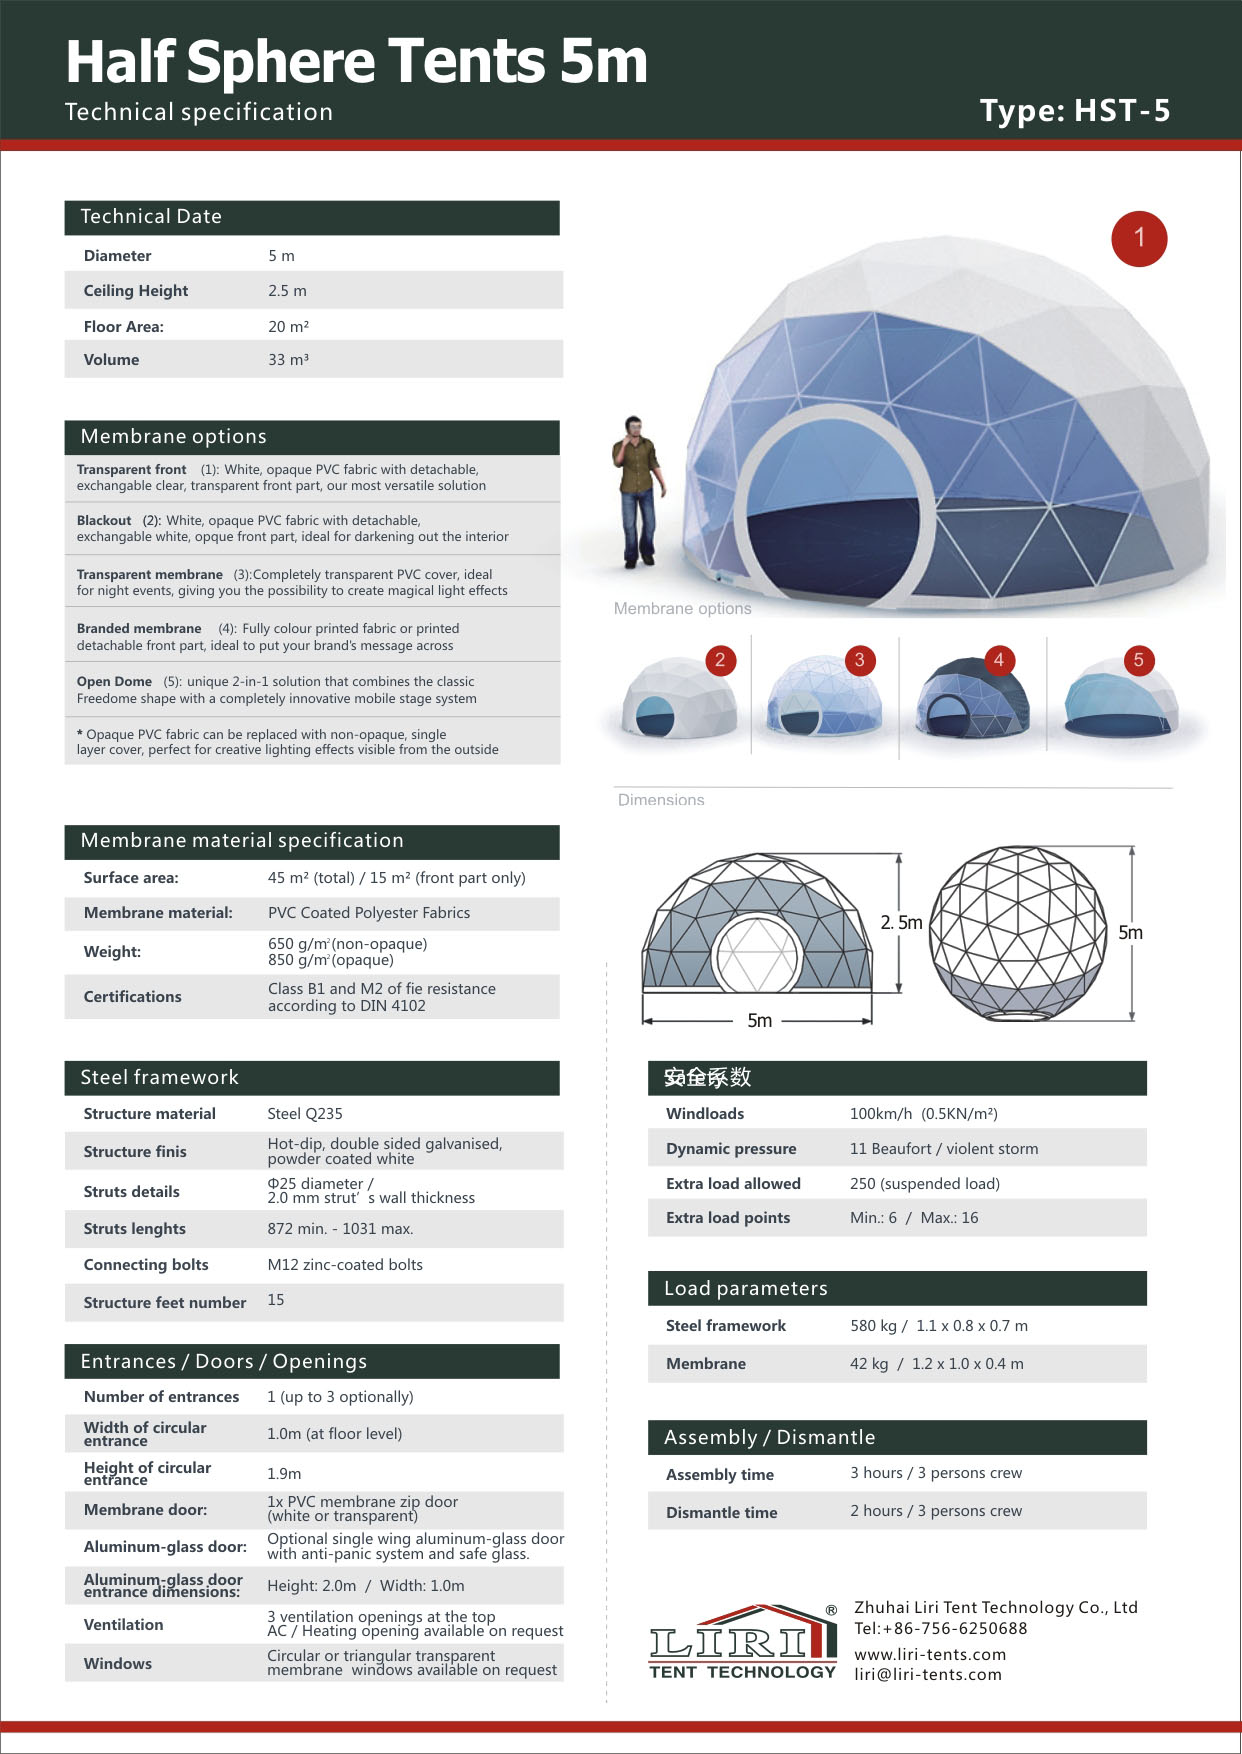 Technical Data for 5m half sphere tent